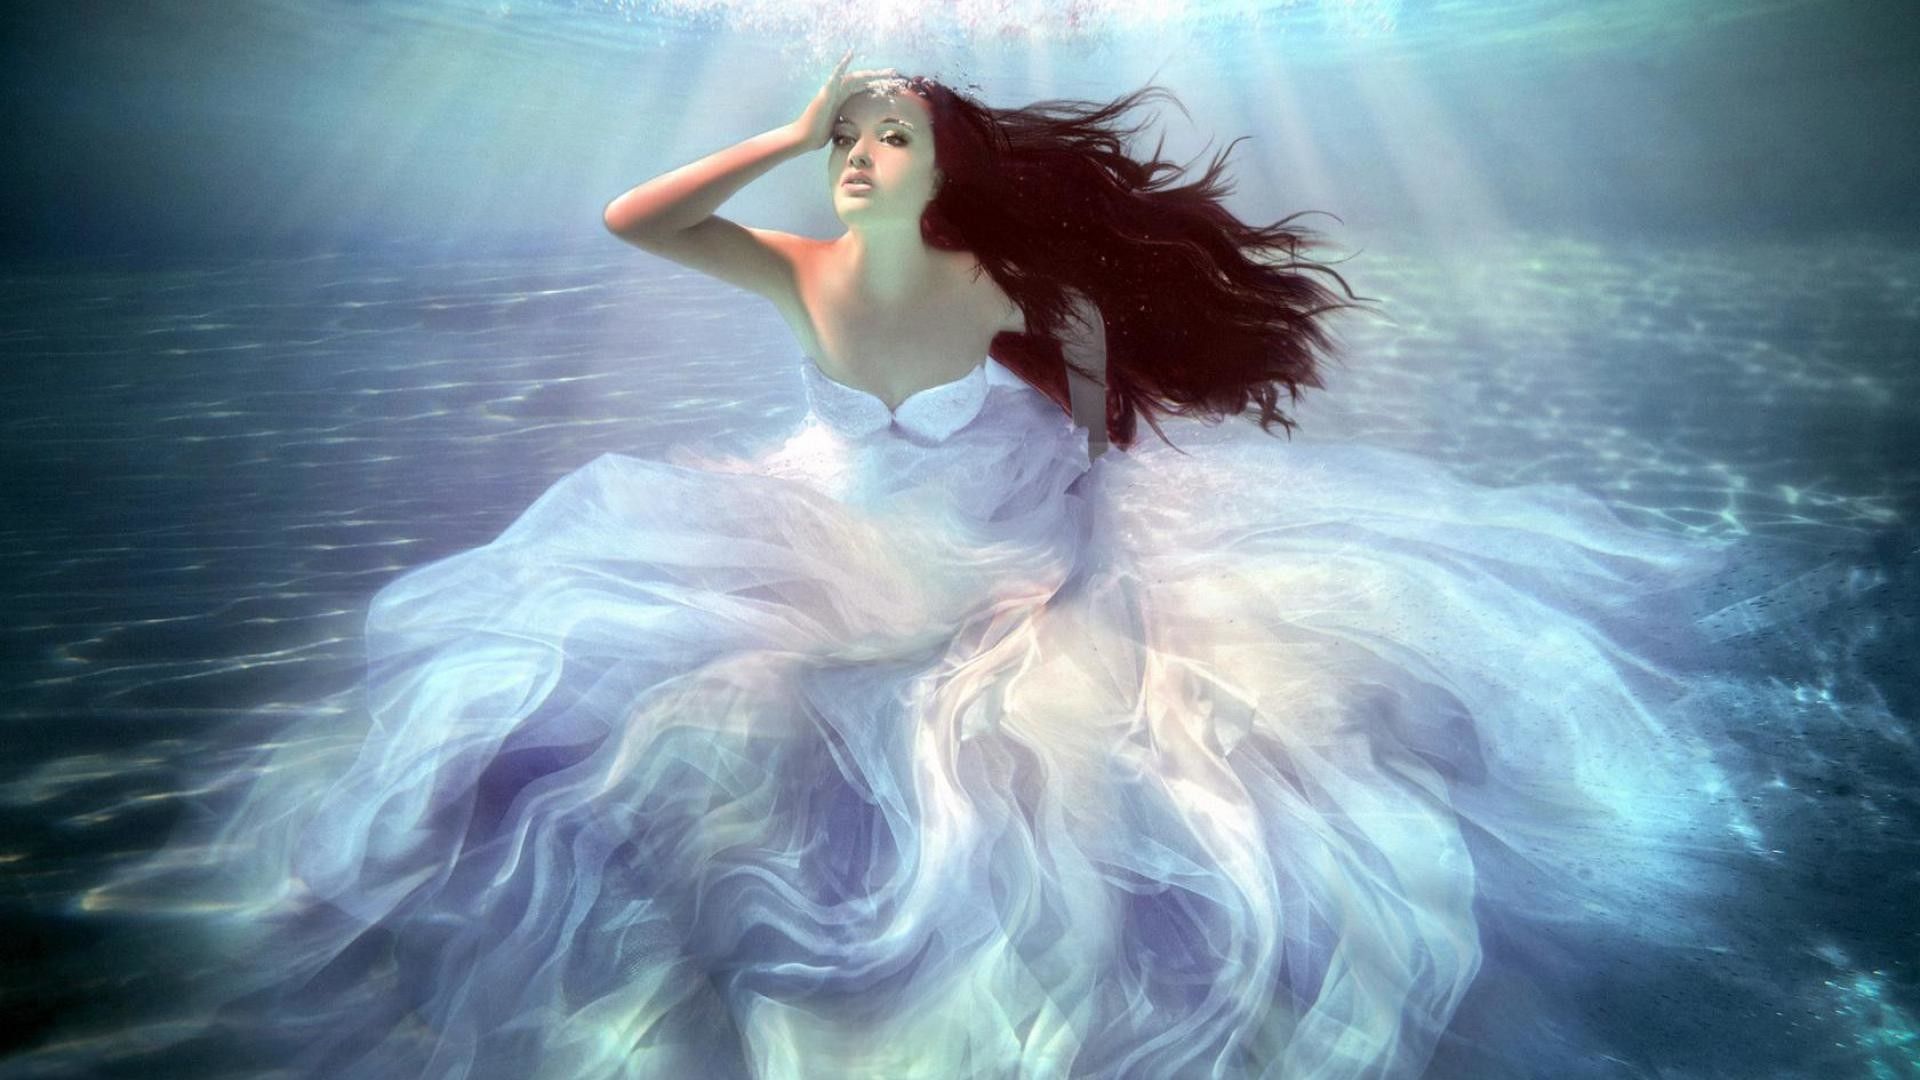 Beautiful Mermaid  Fantasy  Abstract Background Wallpapers on Desktop  Nexus Image 2297047